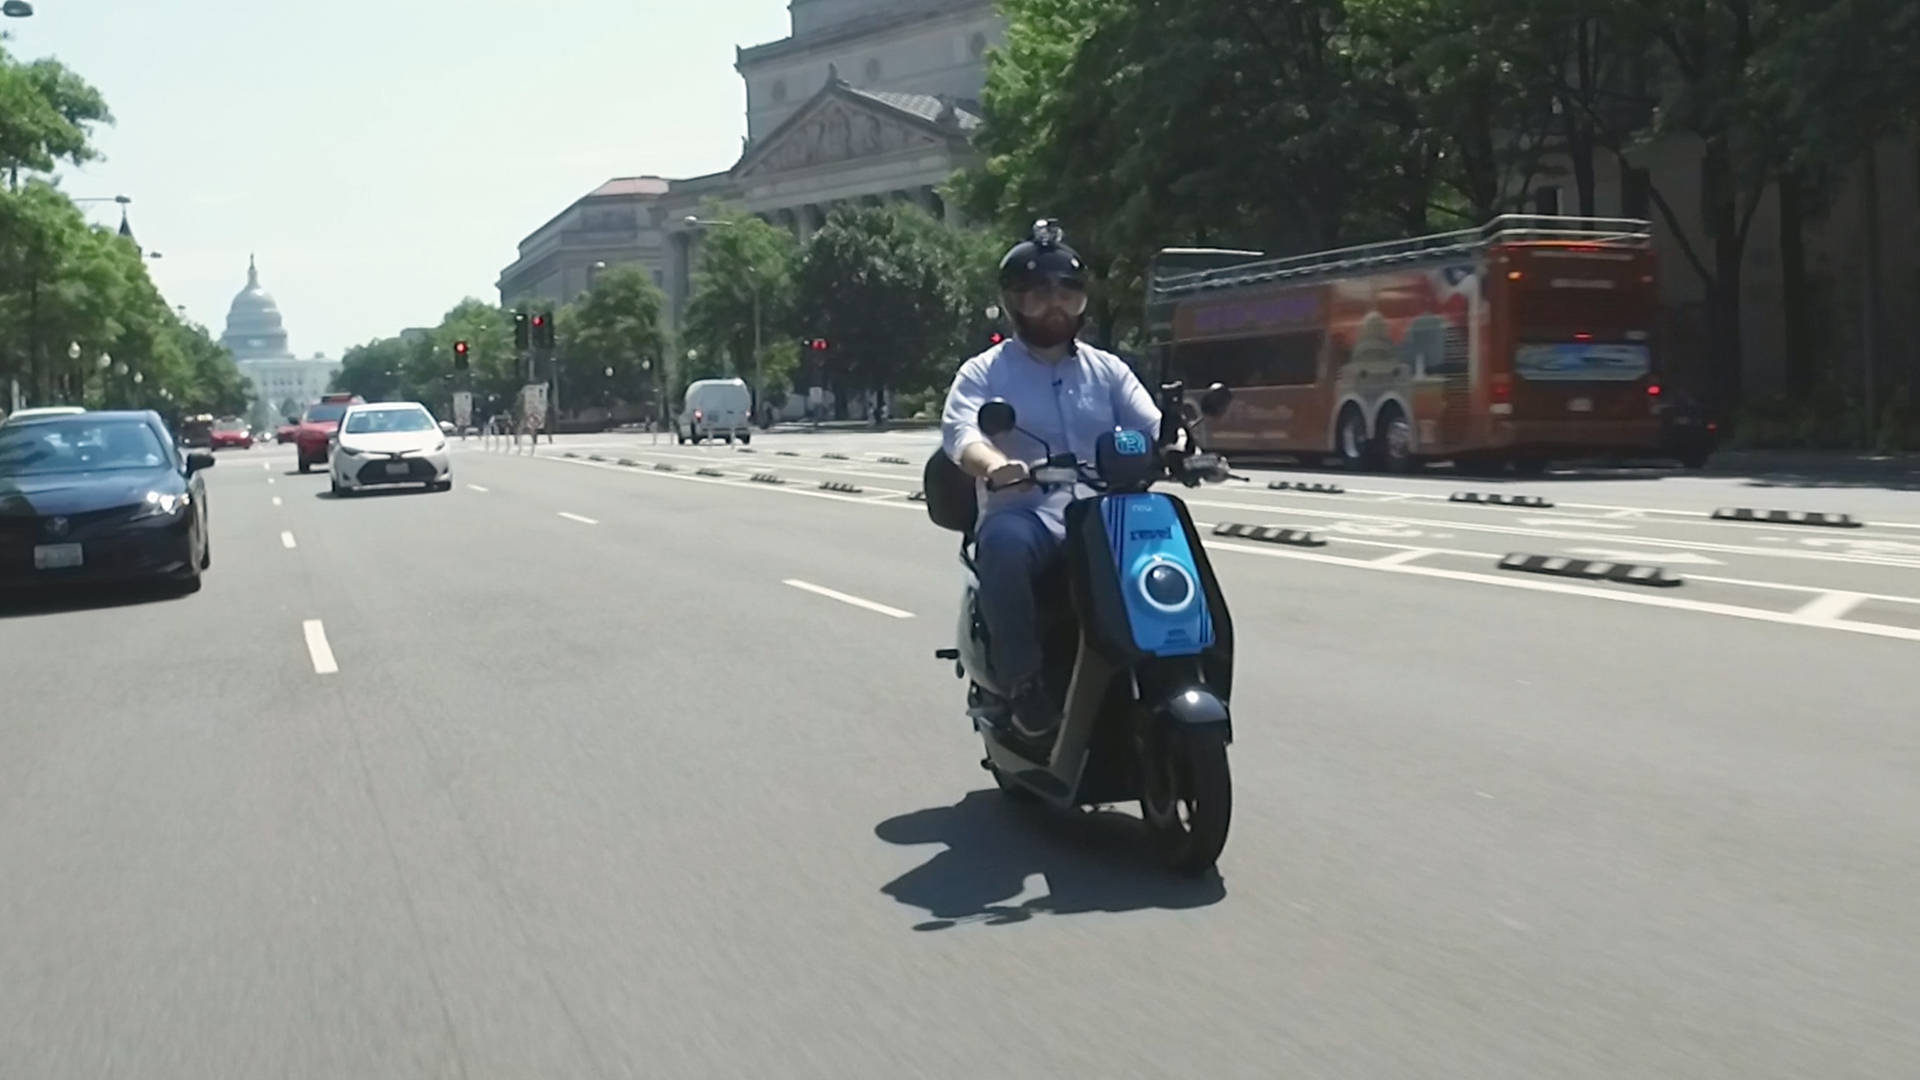 Revel Moped Company Leaving DC After 3 Years – NBC4 Washington